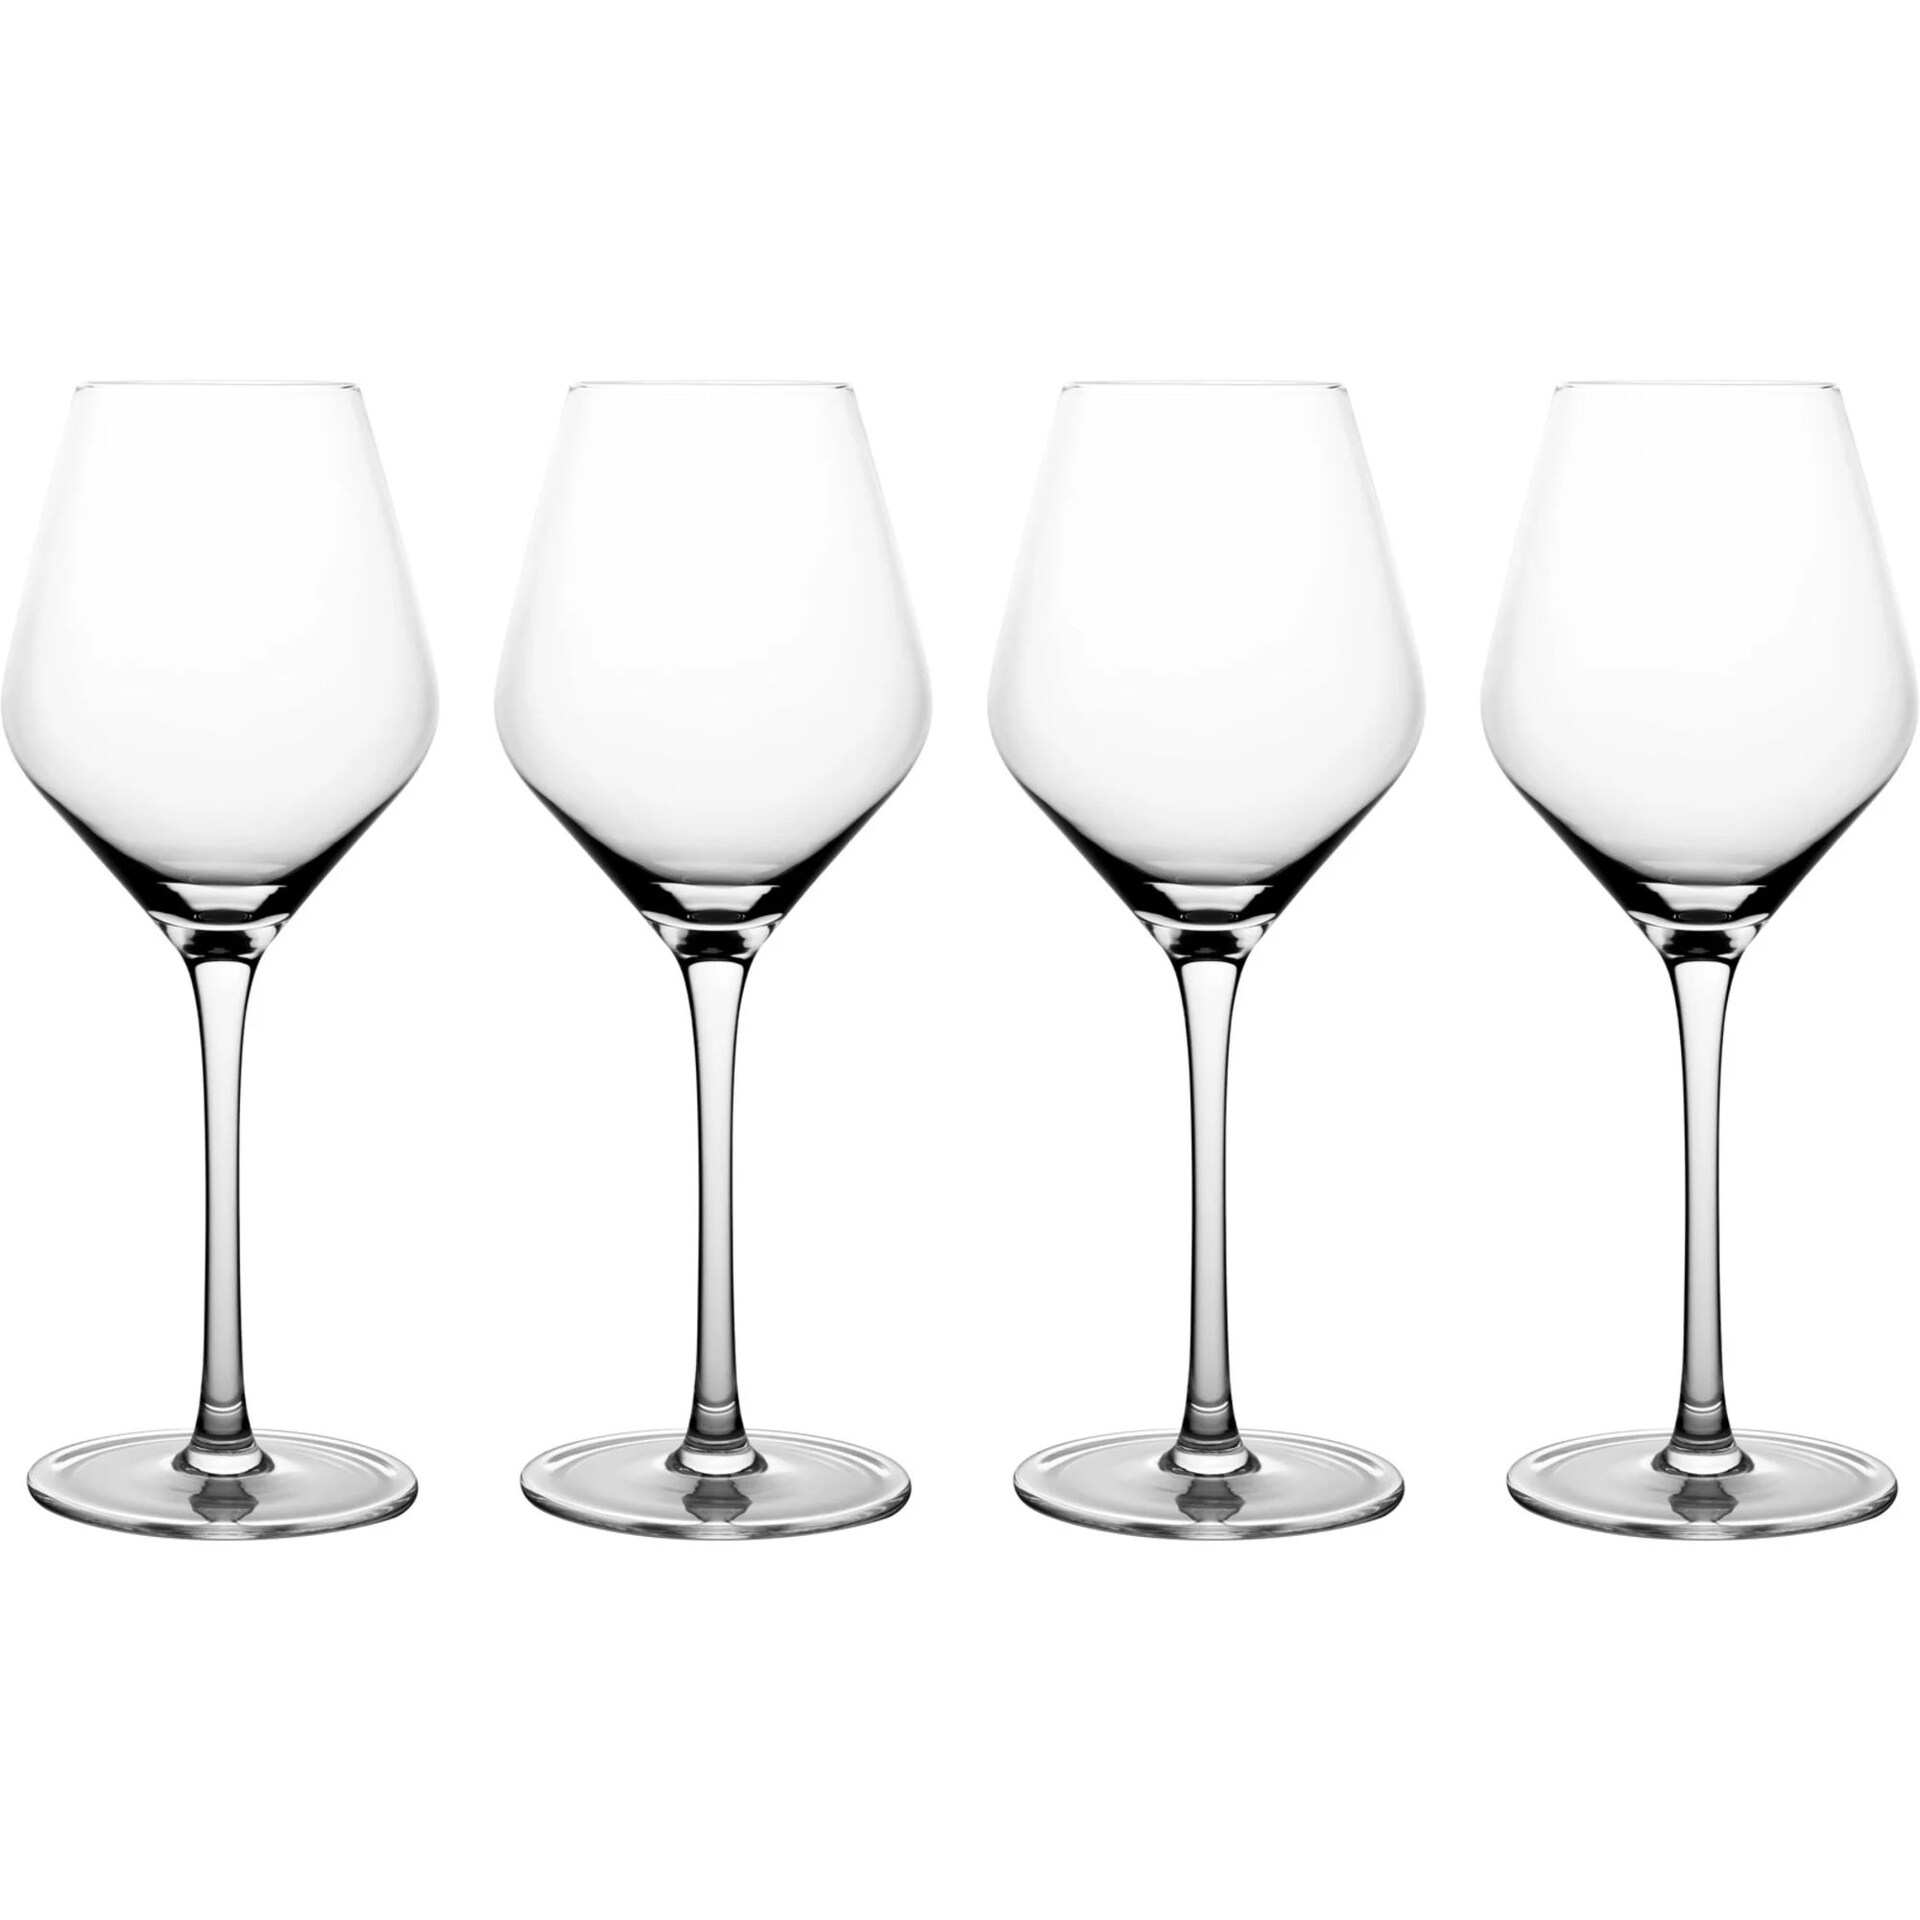 https://royaldesign.com/image/2/mareld-mareld-white-wine-glass-330ml-4pcs-0